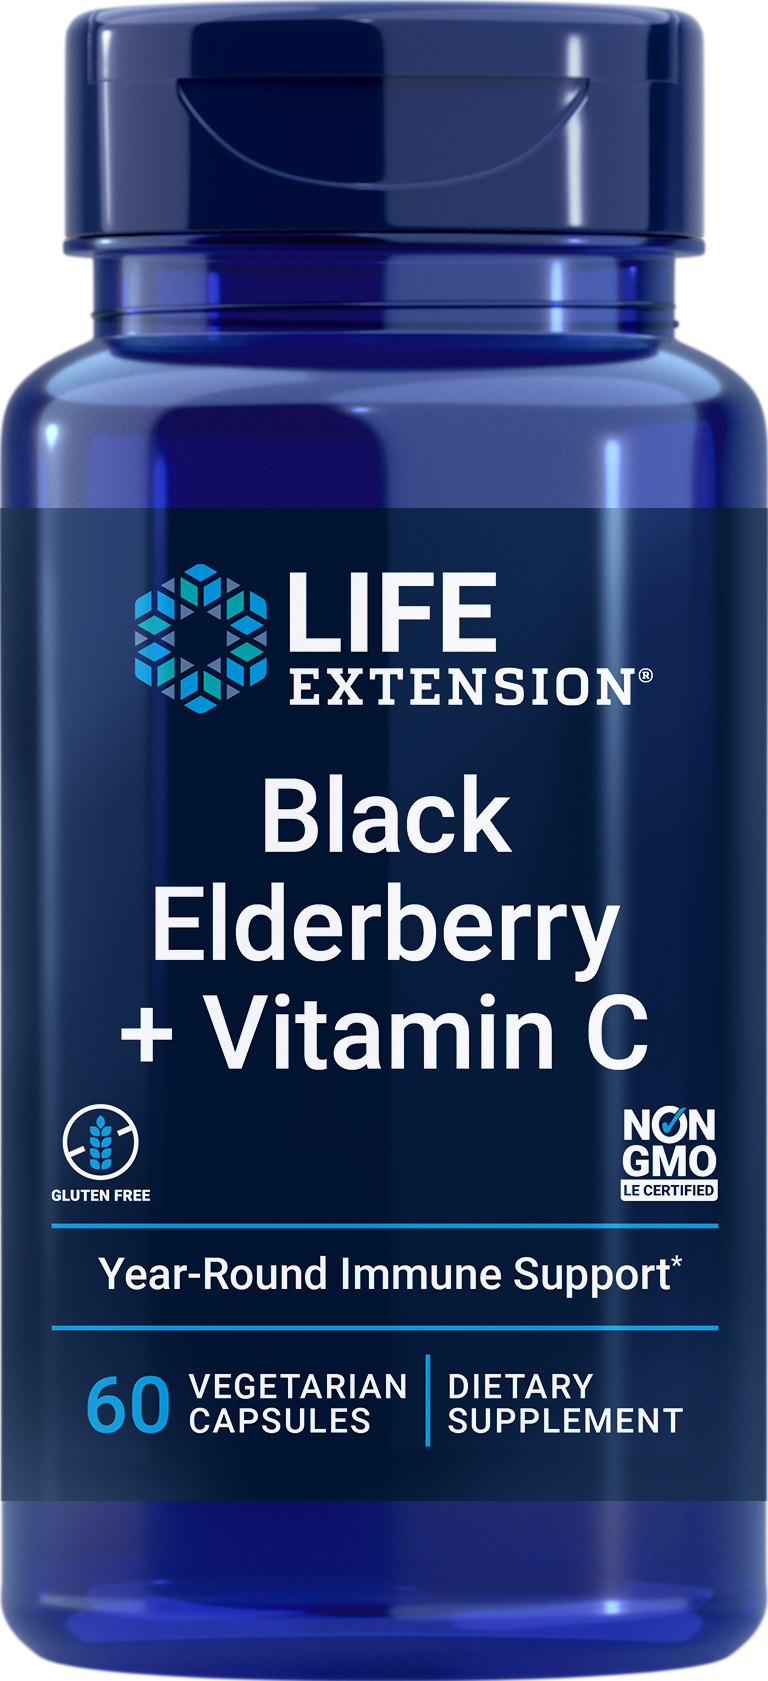 Black Elderberry + Vitamin C